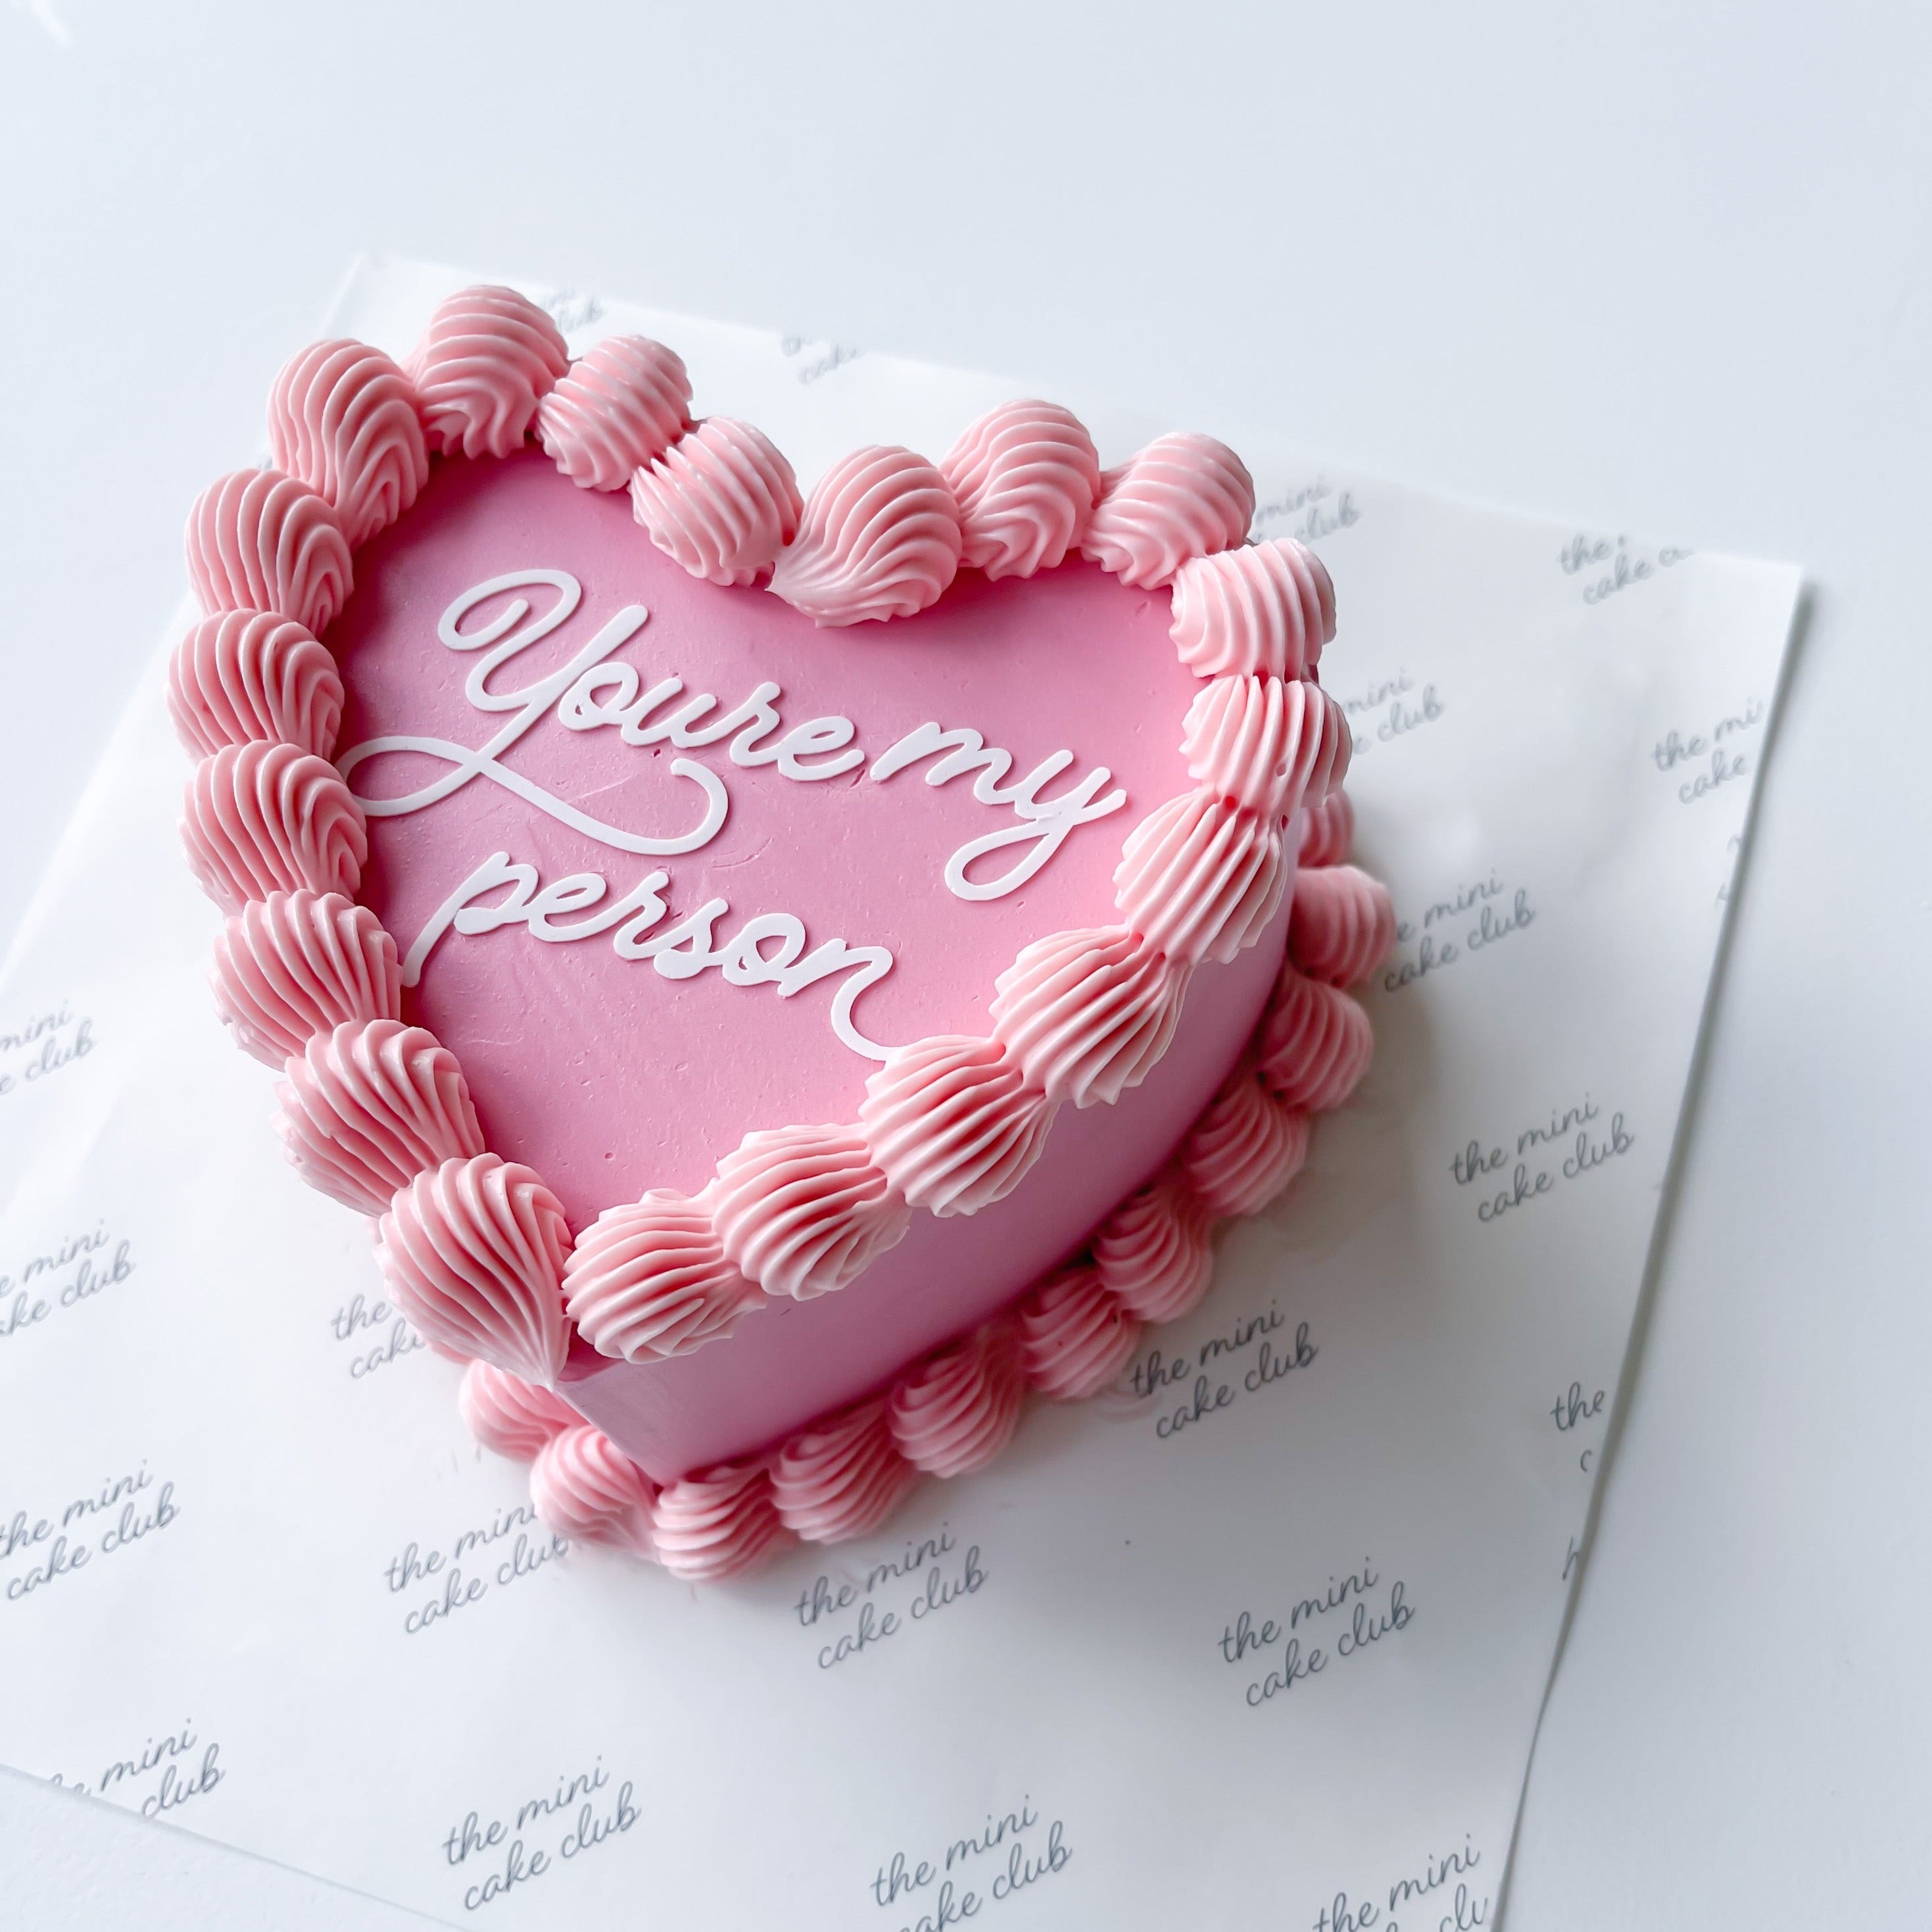 Valentines Day Mini Cake | 6inch Hearts